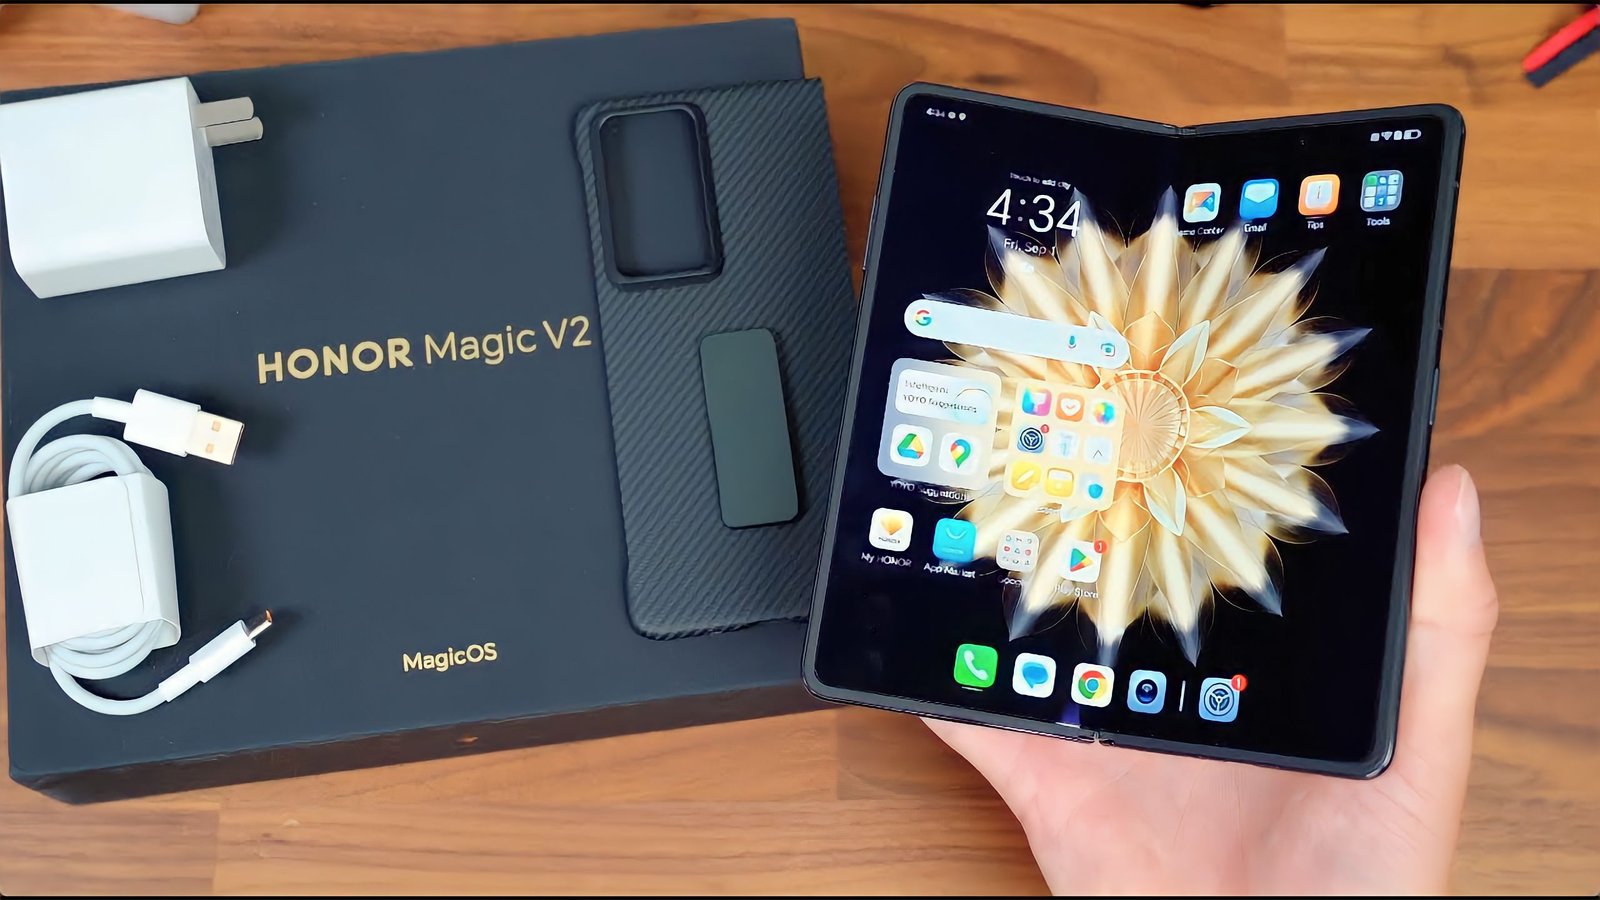 honor magic V2 smartphone